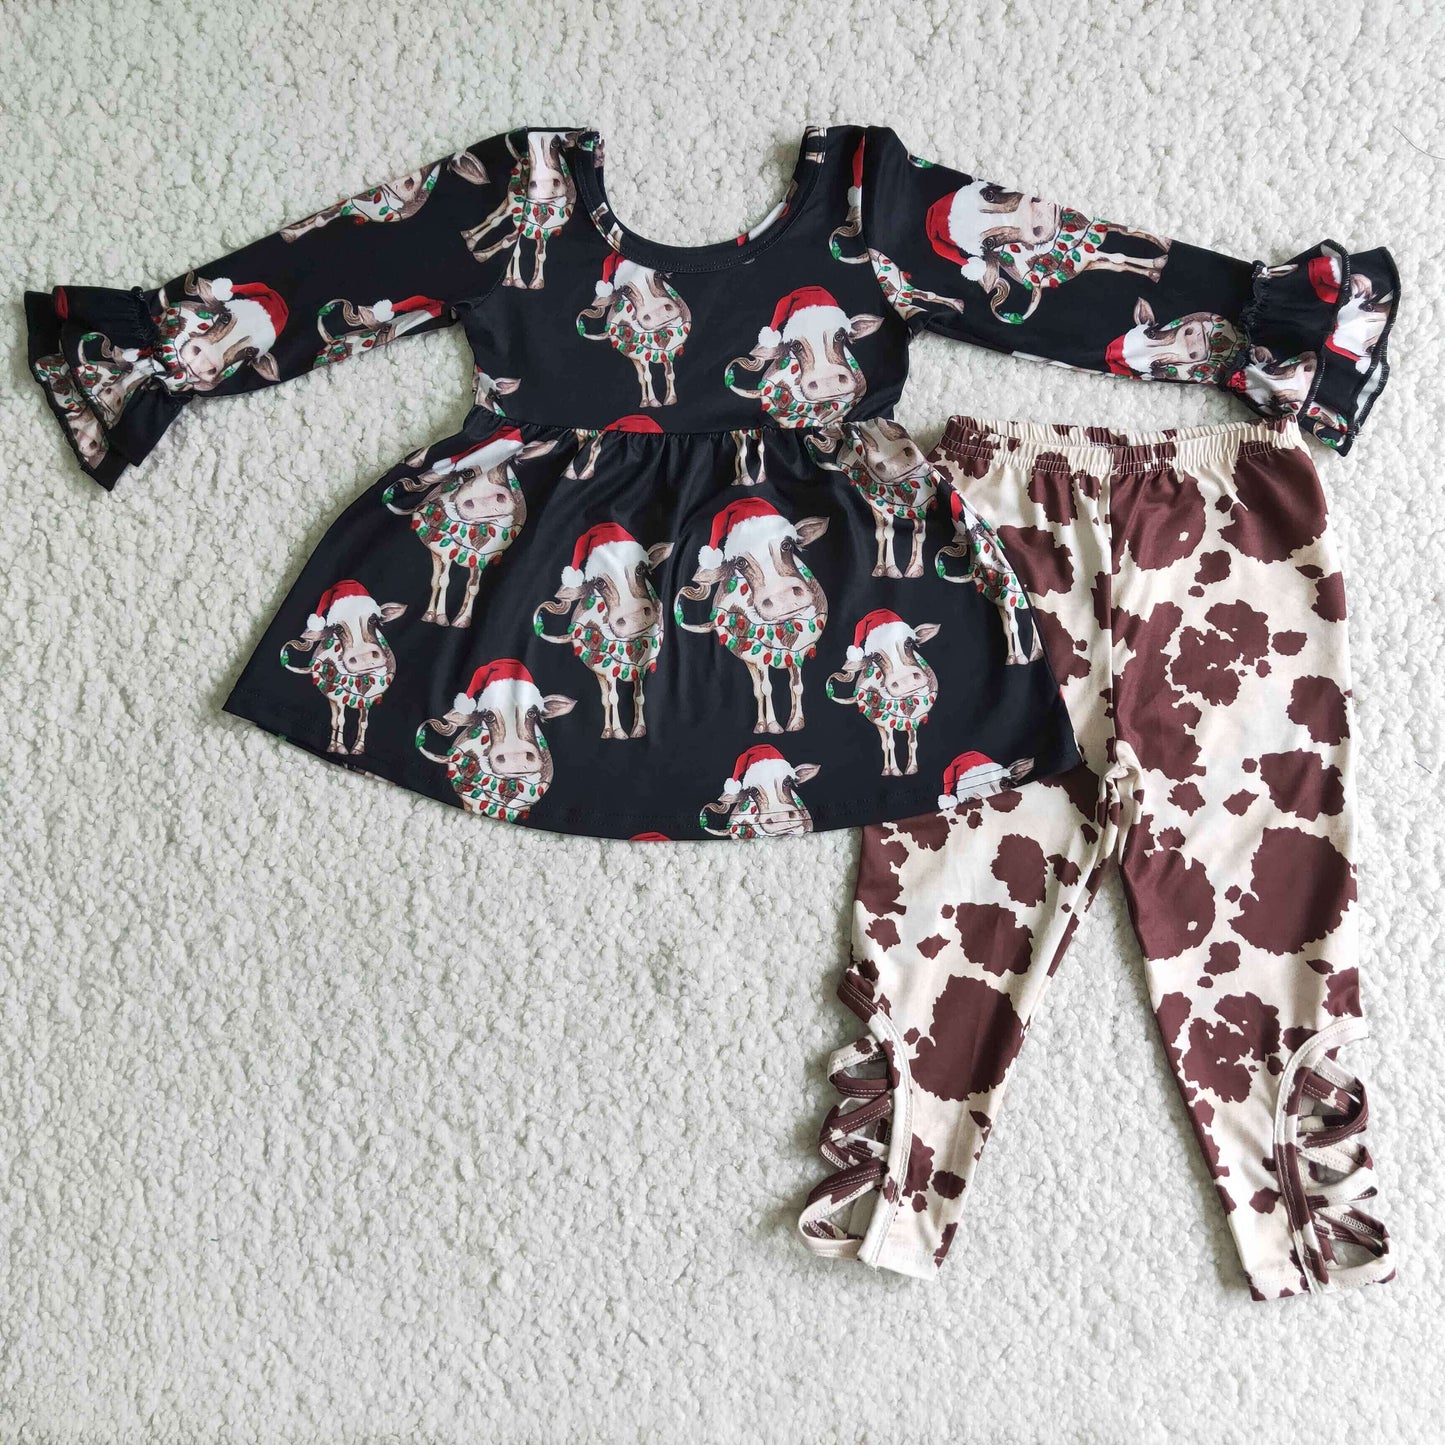 Cow print tunic criss cross leggings girls Christmas outfits